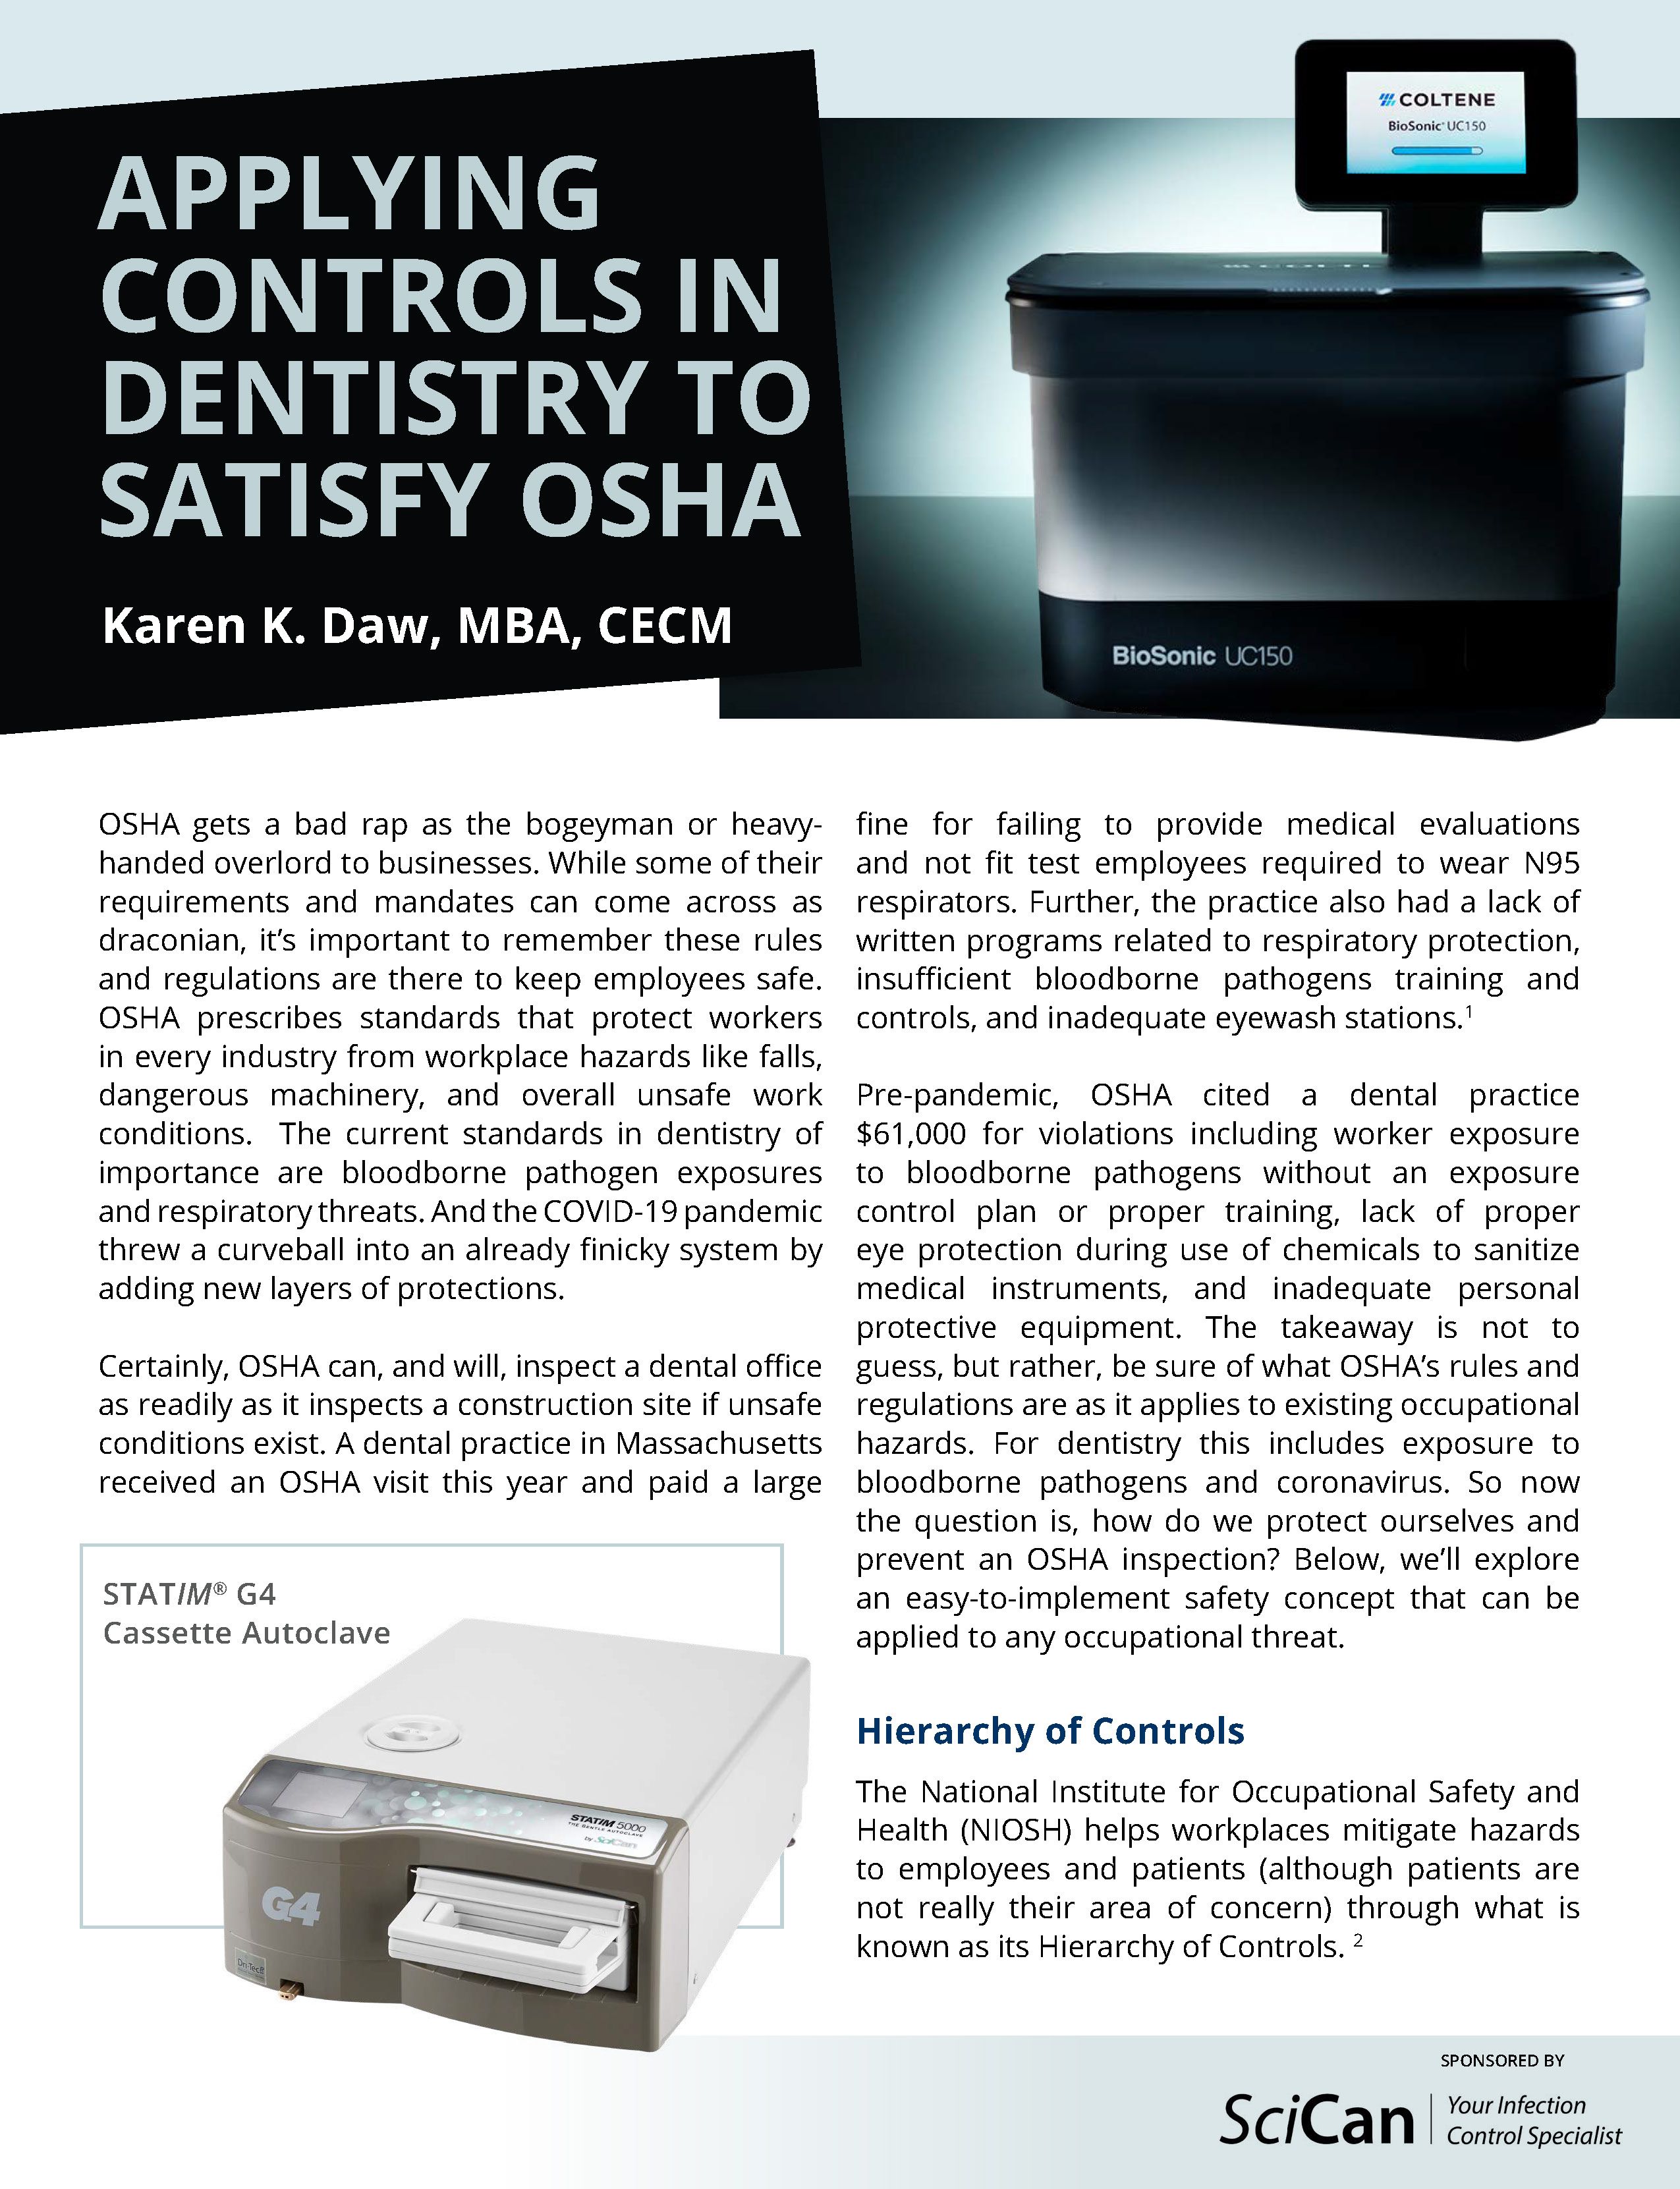 Applying Controls In Dentistry to Satisfy OSHA